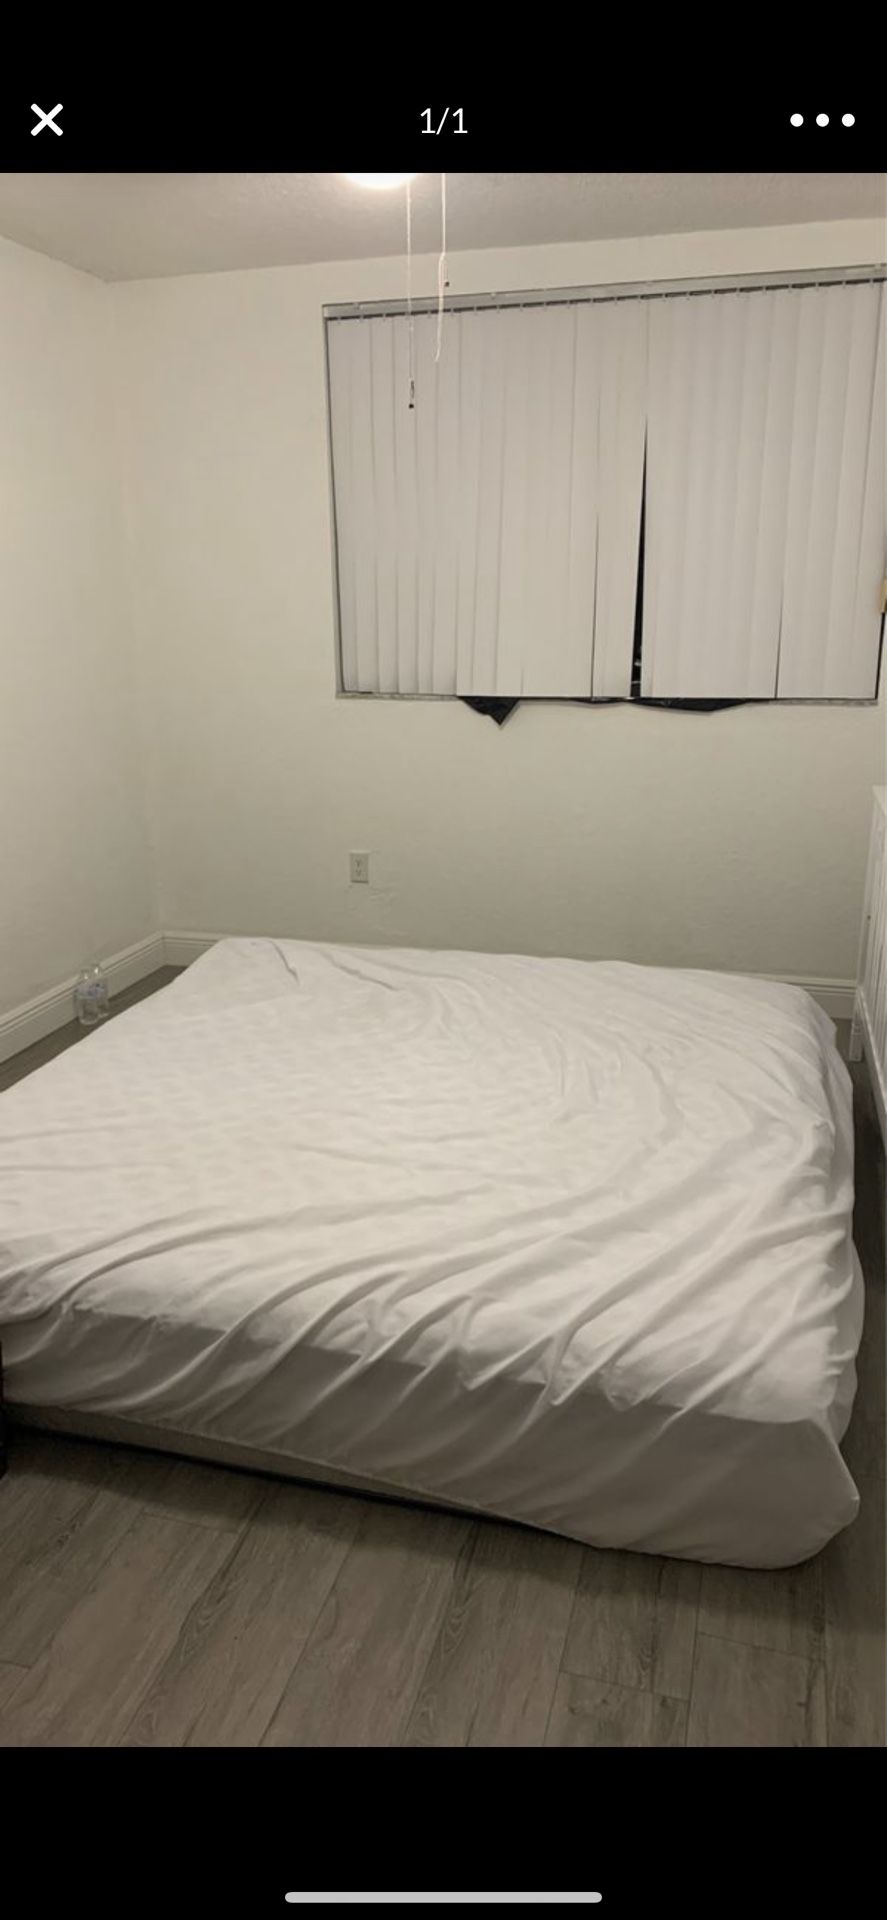 Free king size mattress